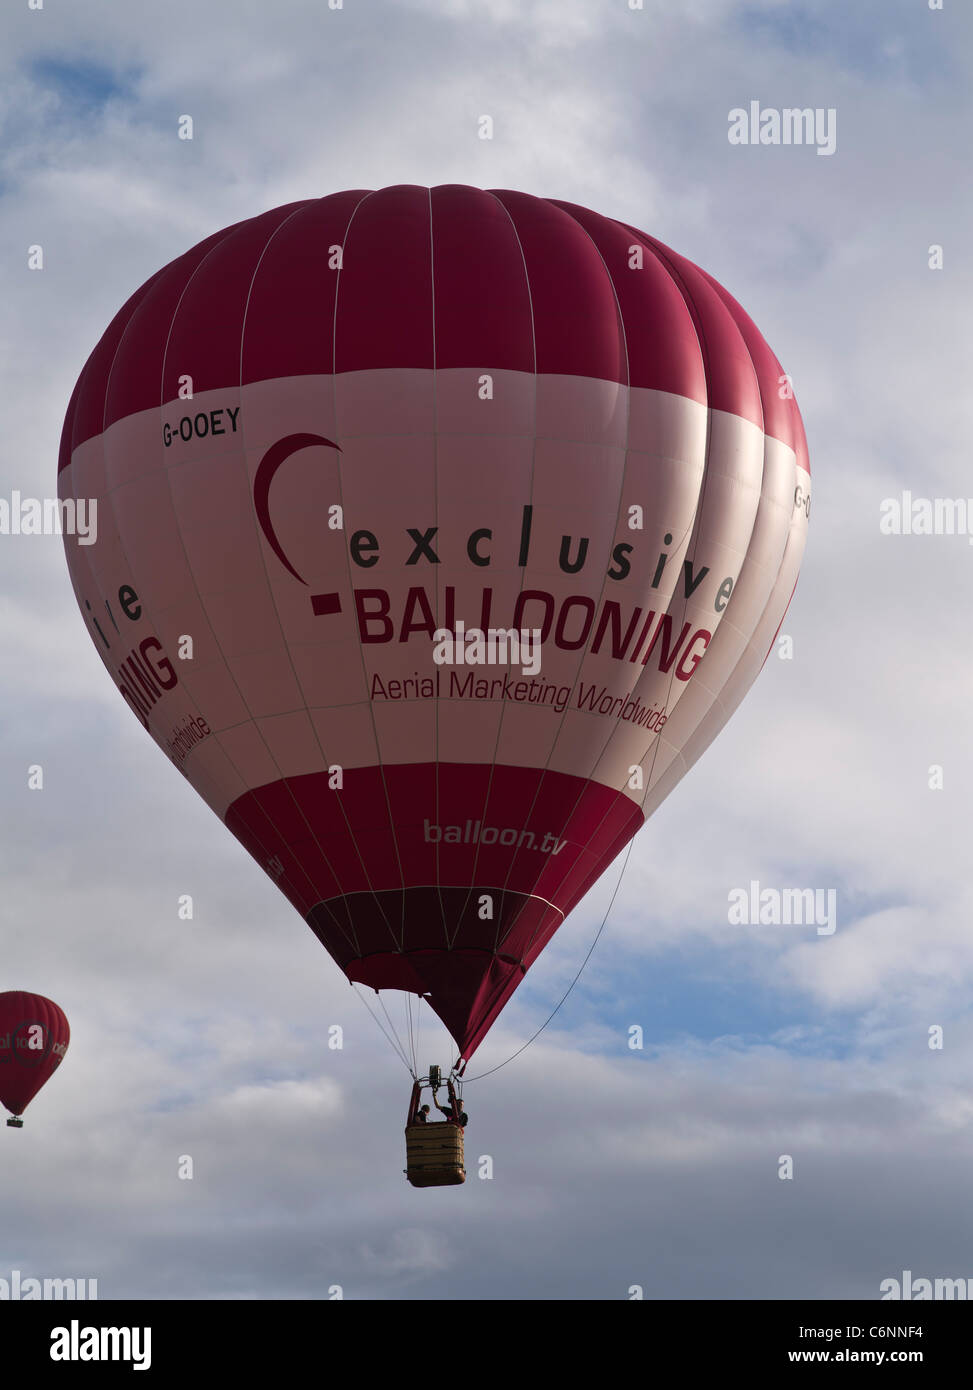 Dh Bristol Balloon Fiesta CLIFTON BRISTOL UK Hot Air Balloon Werbung exklusive Ballonfahrt Marketing in Sky Festival Stockfoto